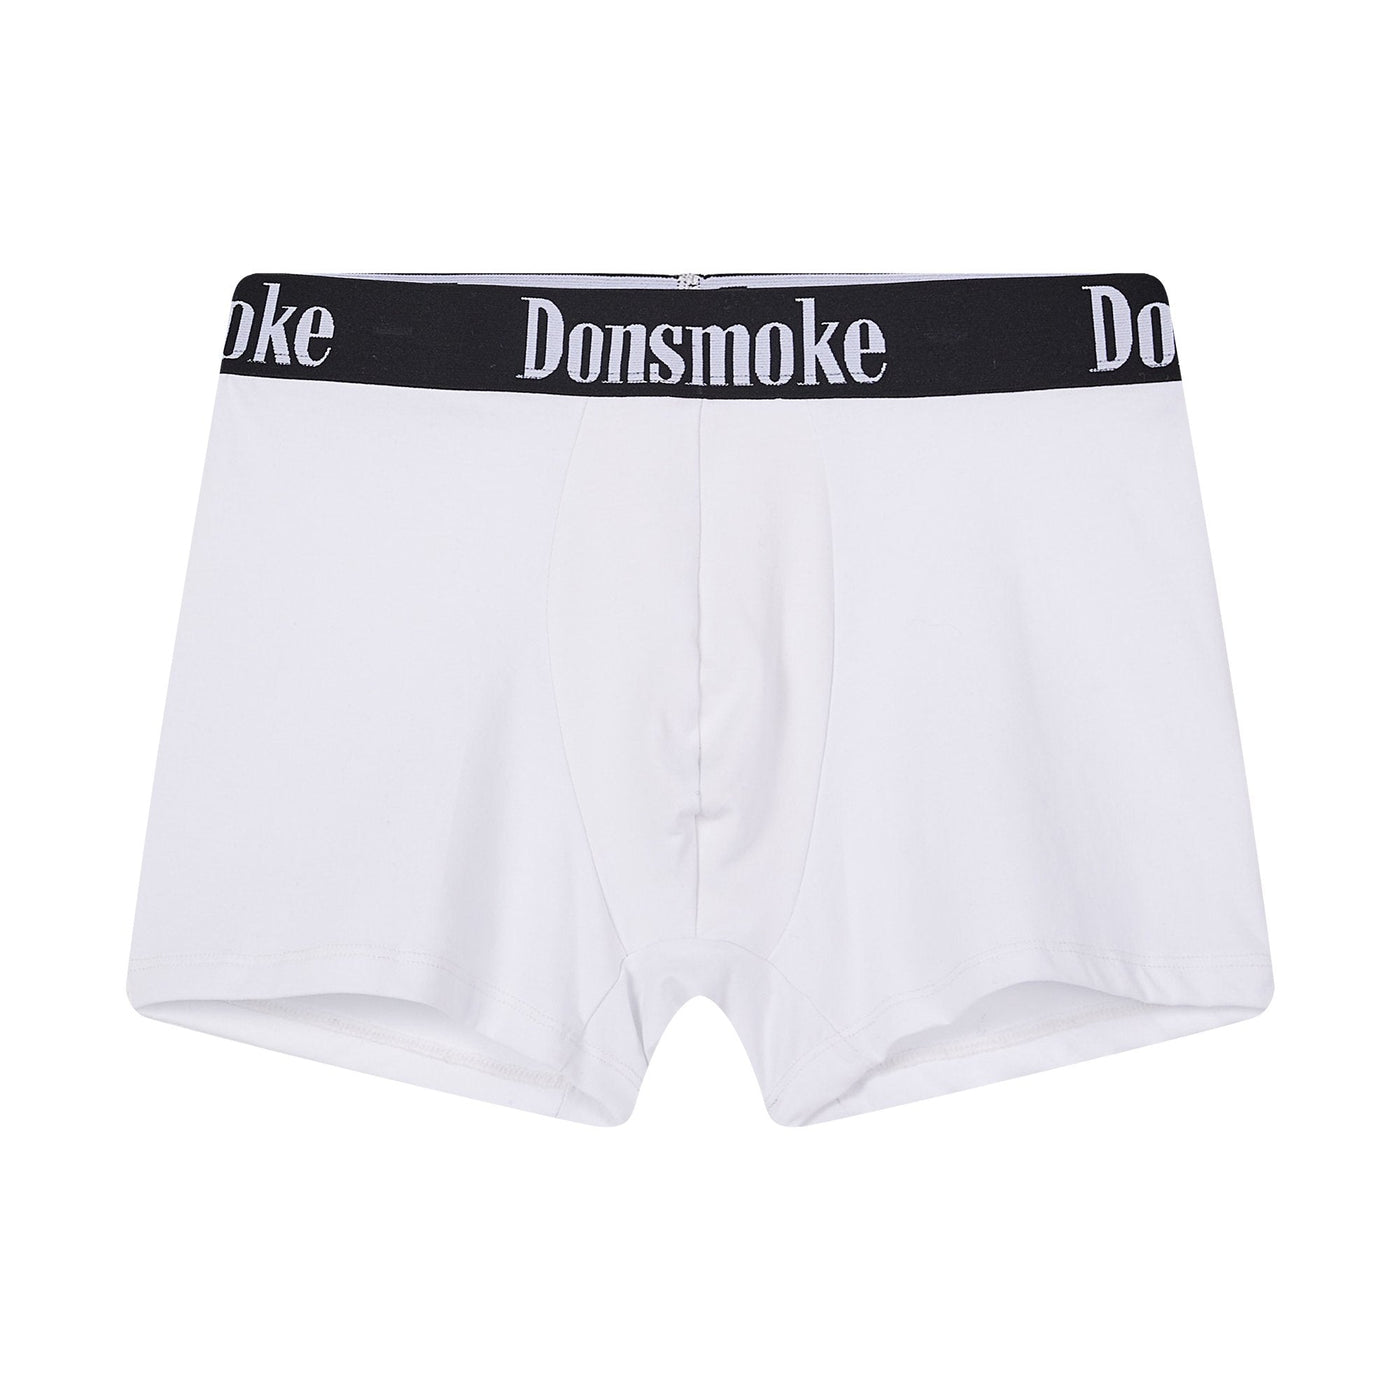 Boxers Korean Street Fashion Underwear By Donsmoke Shop Online at OH Vault